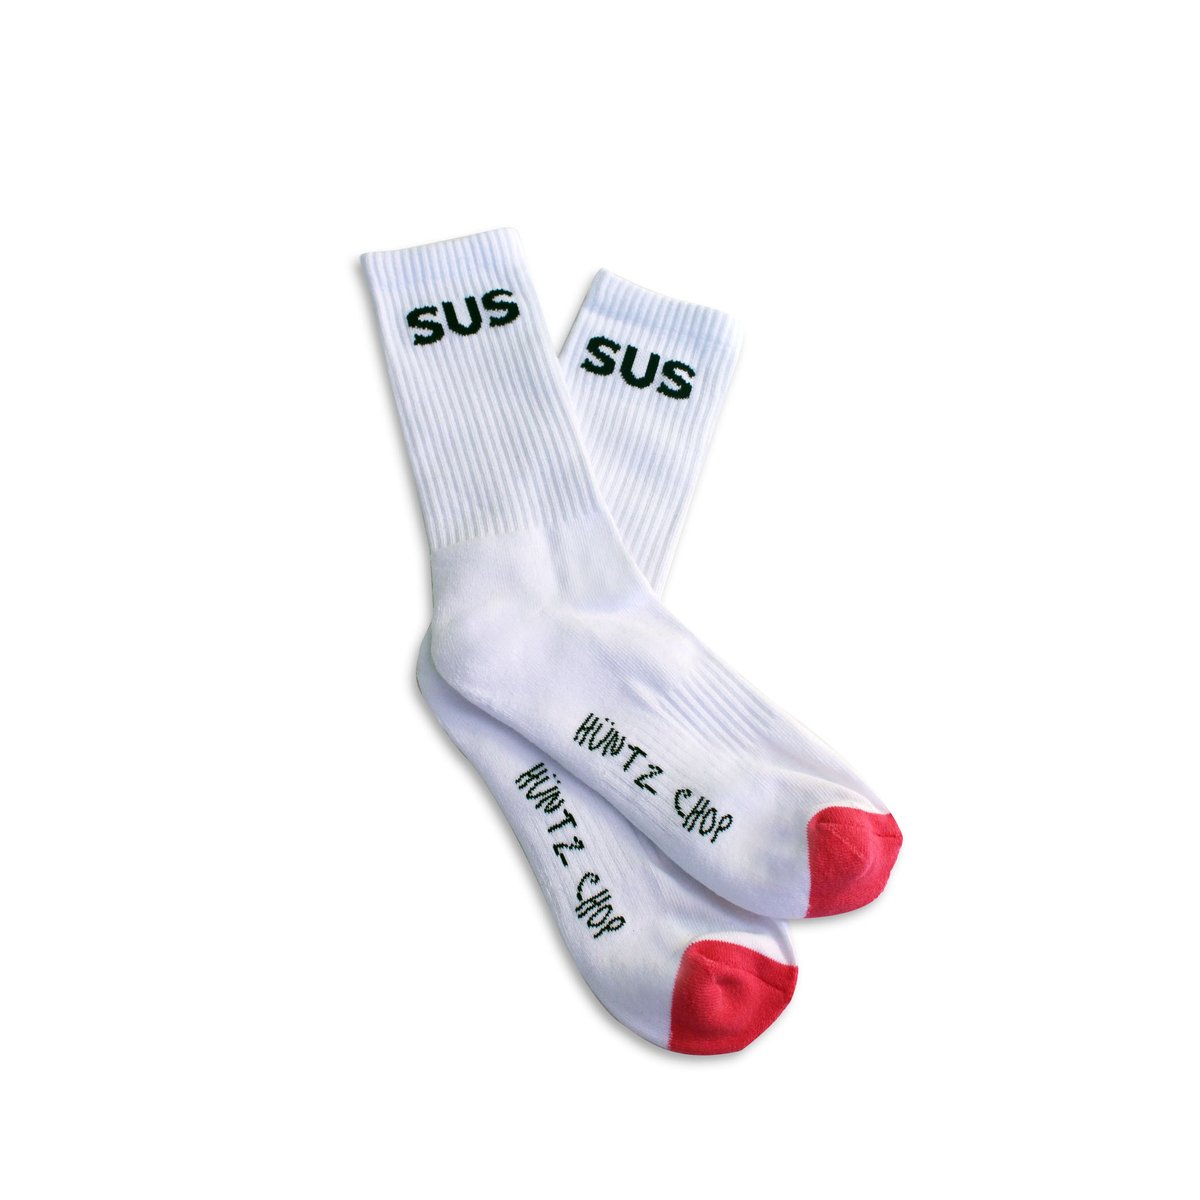 Image of Hüntz Chop Sus Socks